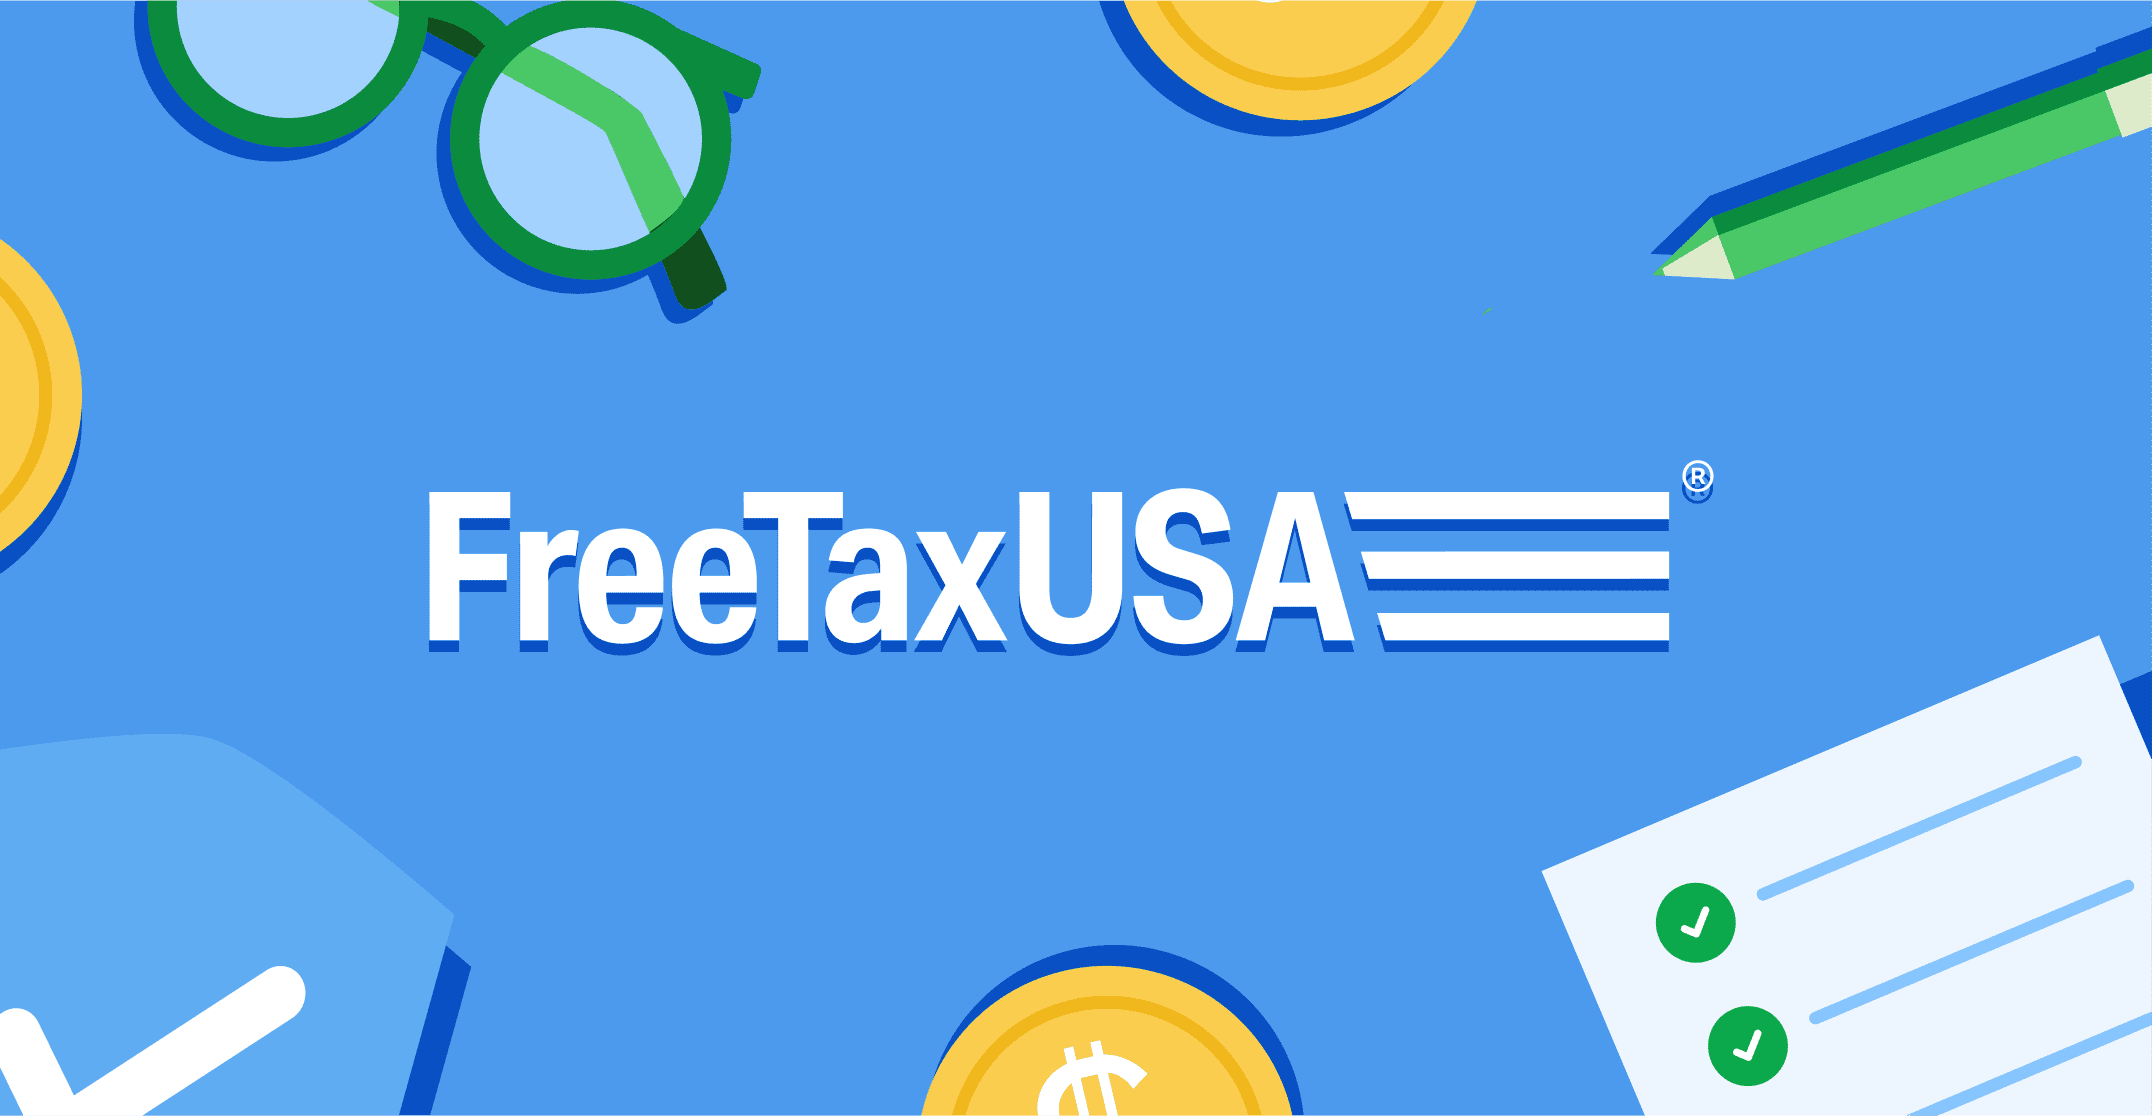 www.freetaxusa.com